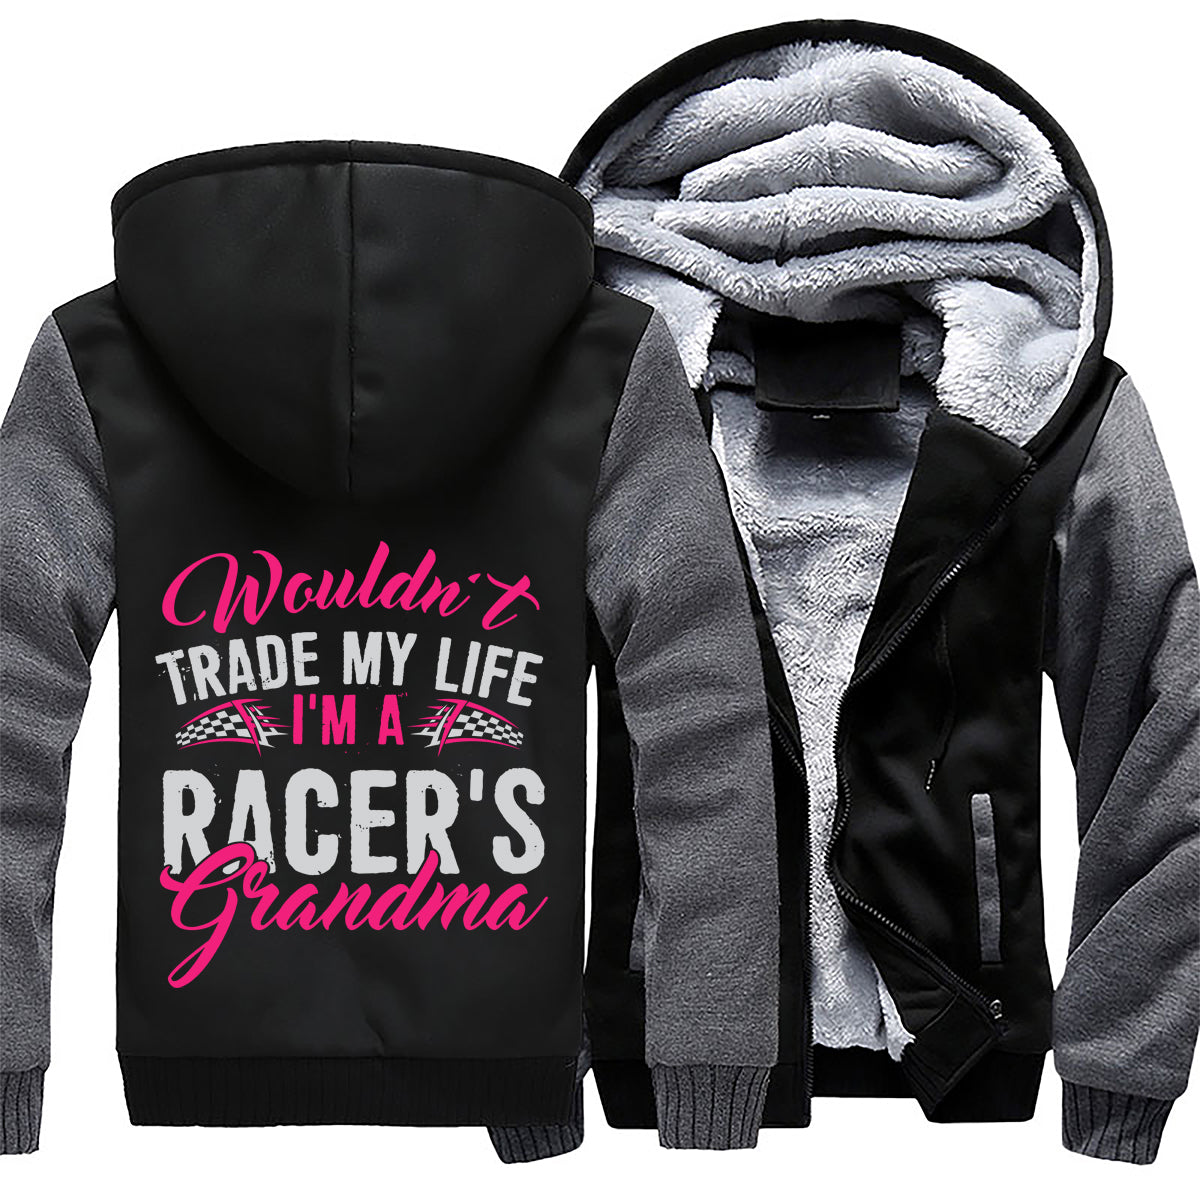 I'm A Racer's Grandma Jacket 